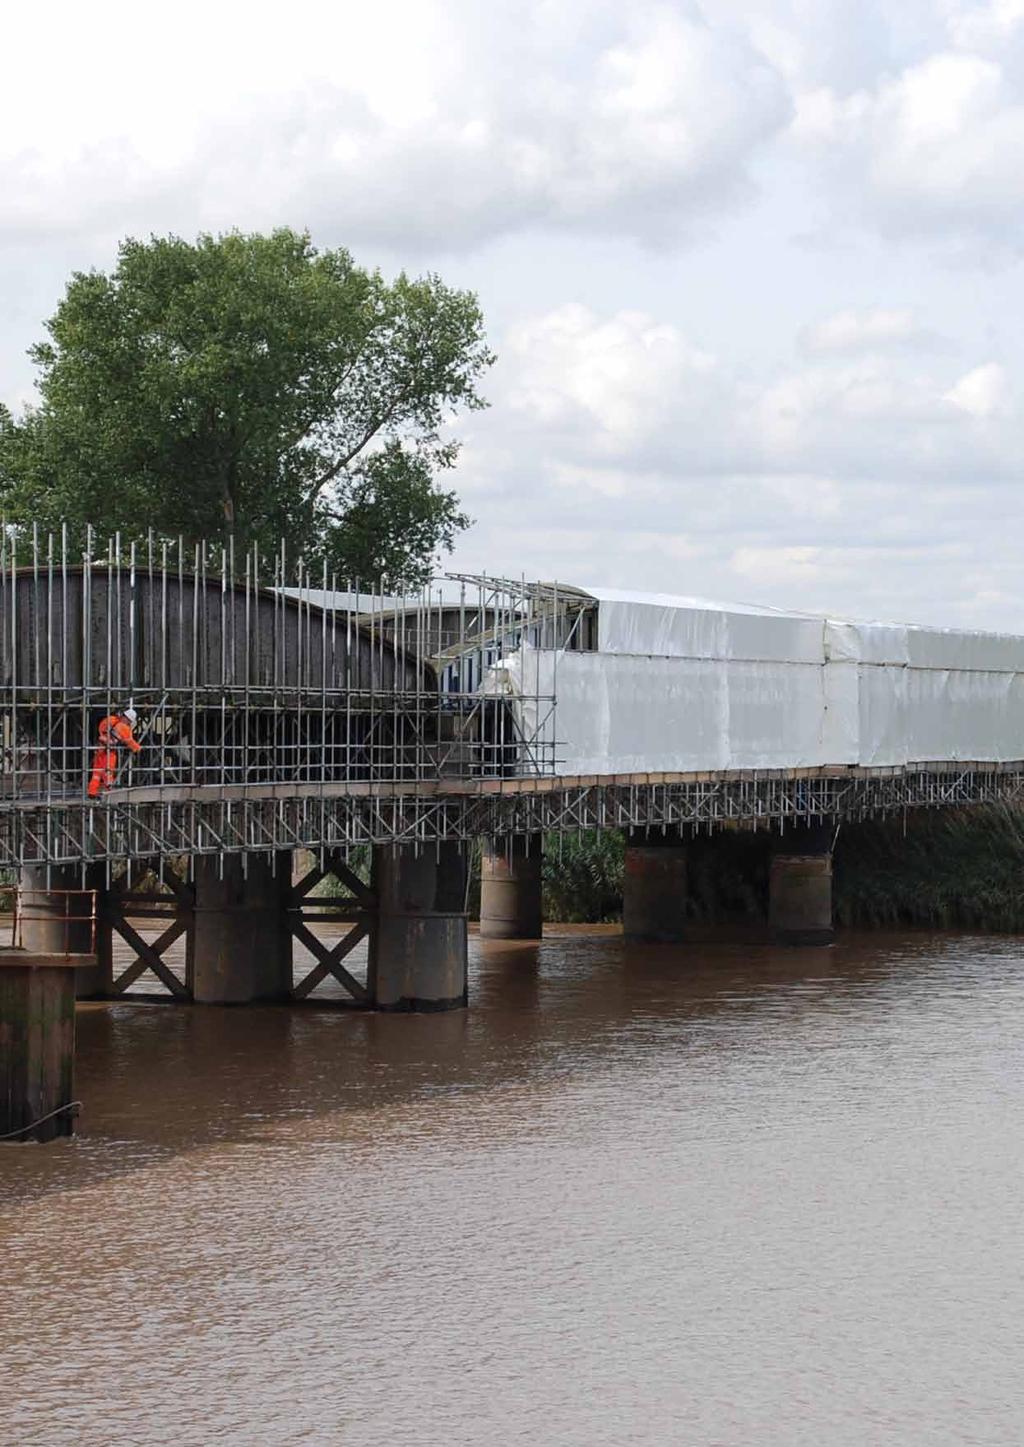 GOOLE SWING BRIDGE [Humberside] Project: shrink wrap Encapsulation of Goole Swing Bridge Purpose: Protect The Dutch River